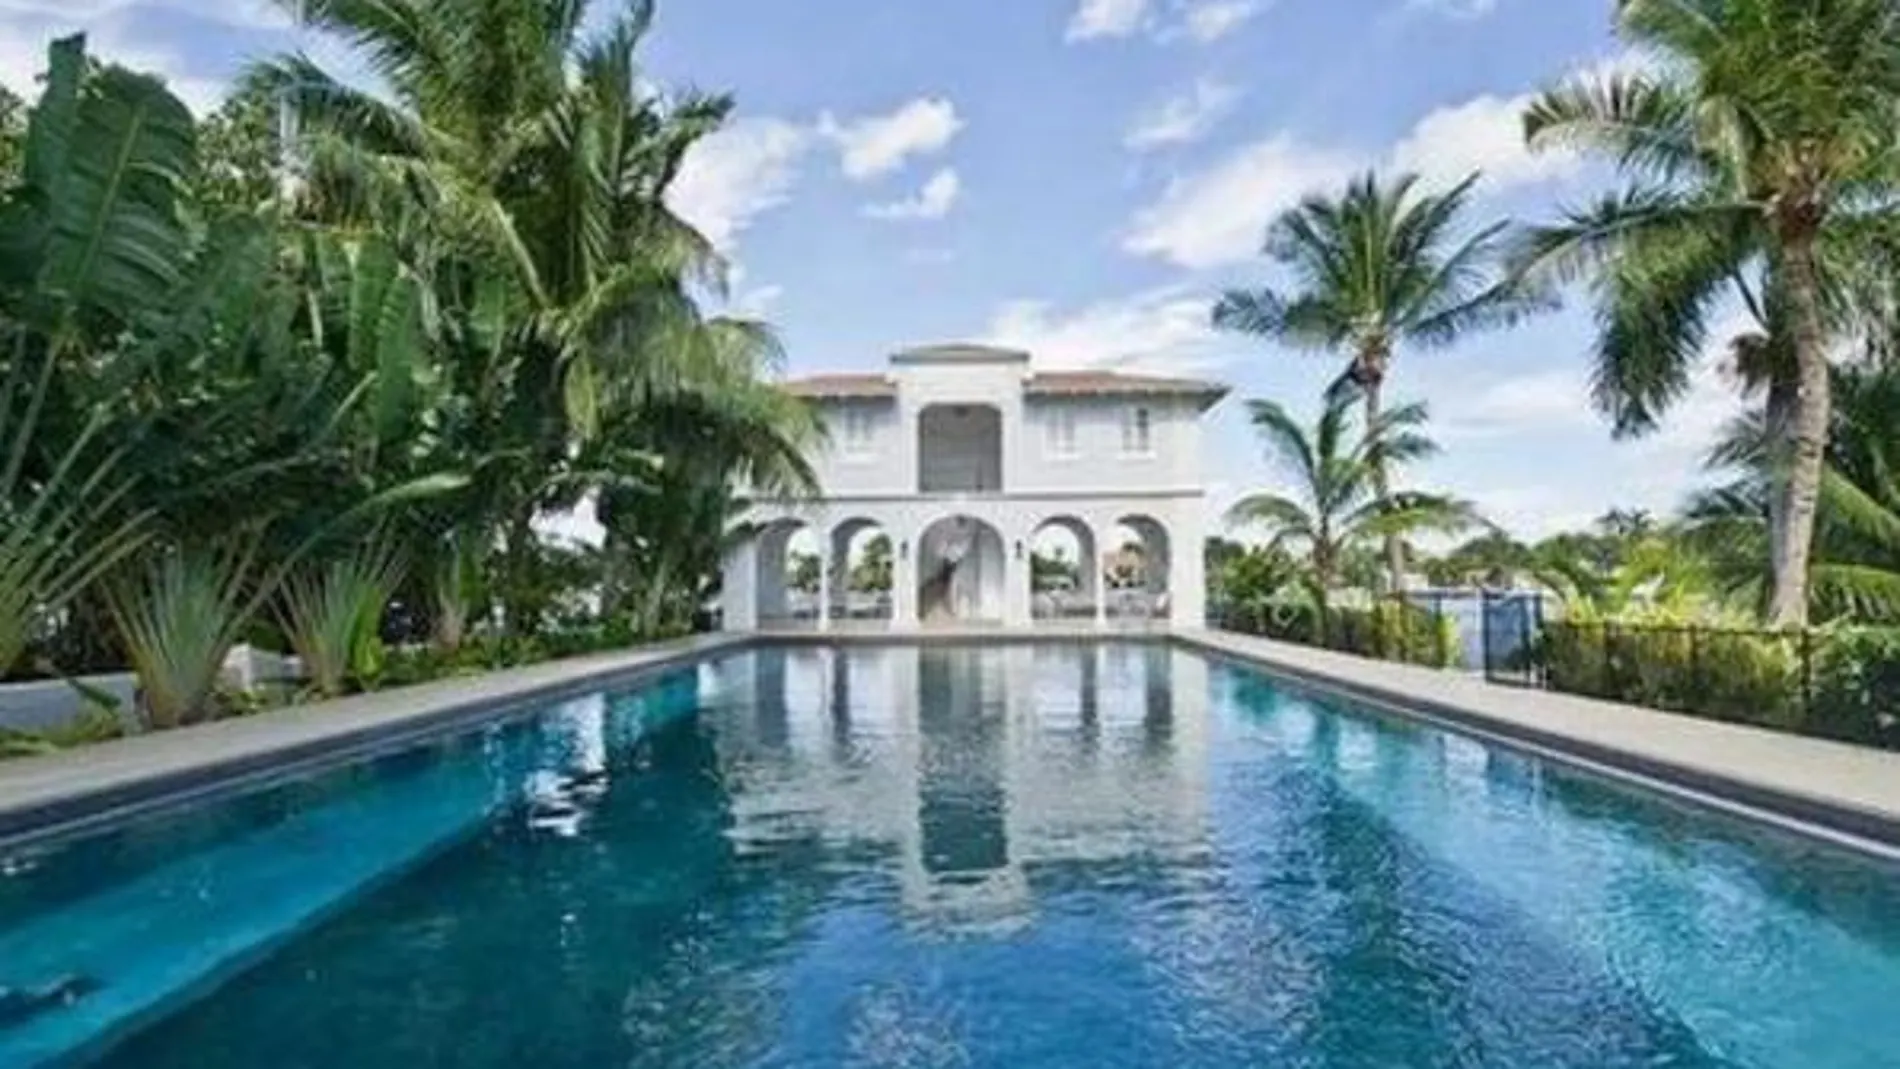 Se alquila la antigua residencia de Al Capone en Miami Beach